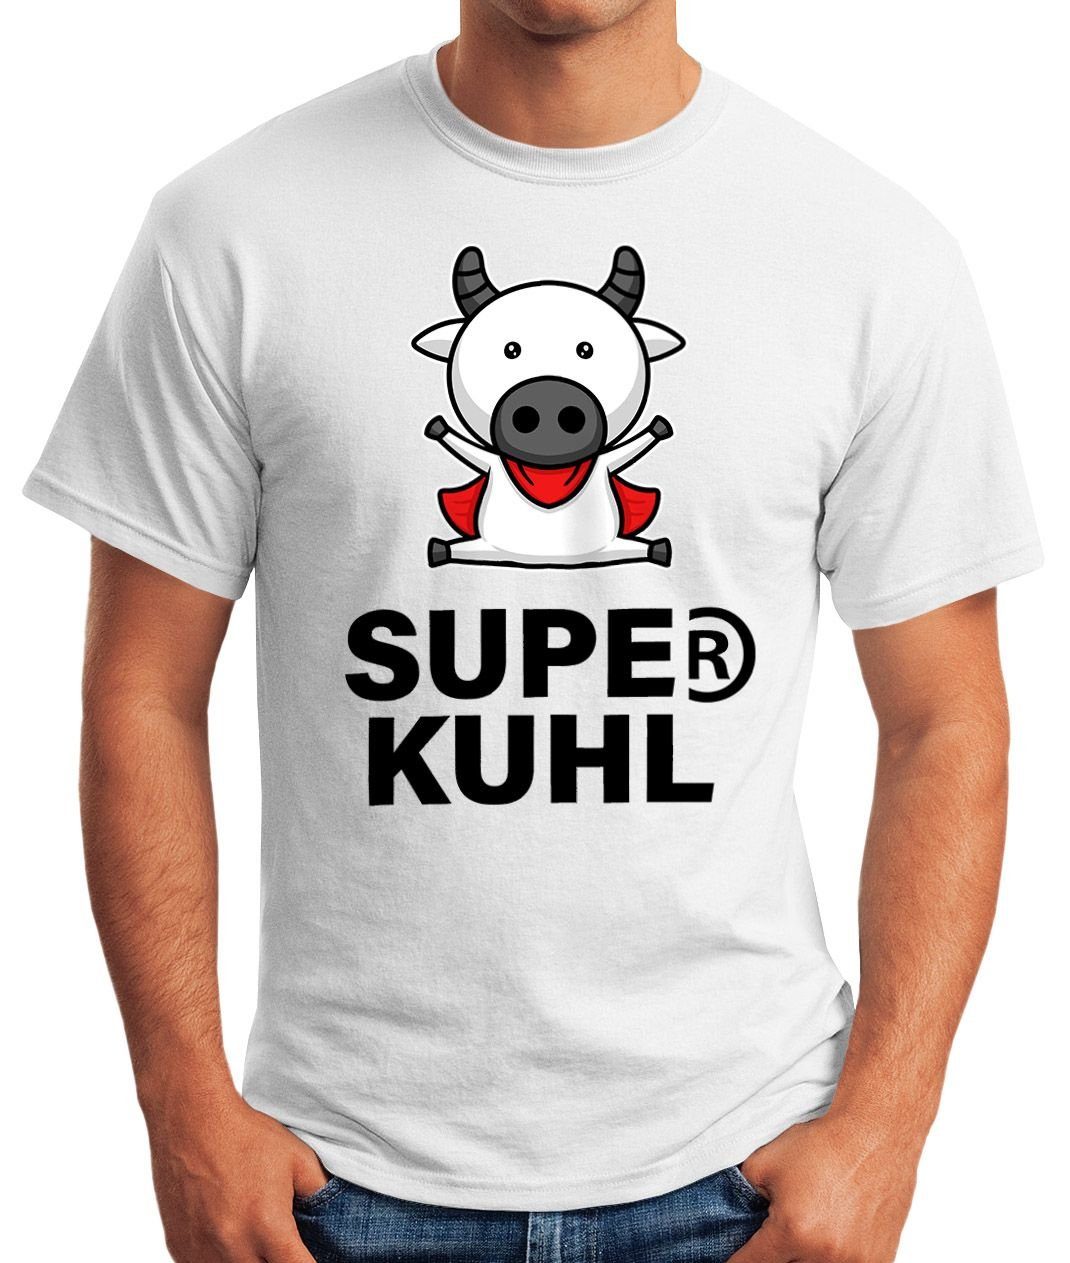 Print-Shirt Print Herren Super Moonworks® Kuh Kuhl mit Fun-Shirt MoonWorks T-Shirt weiß Tier-Motiv Lustiges